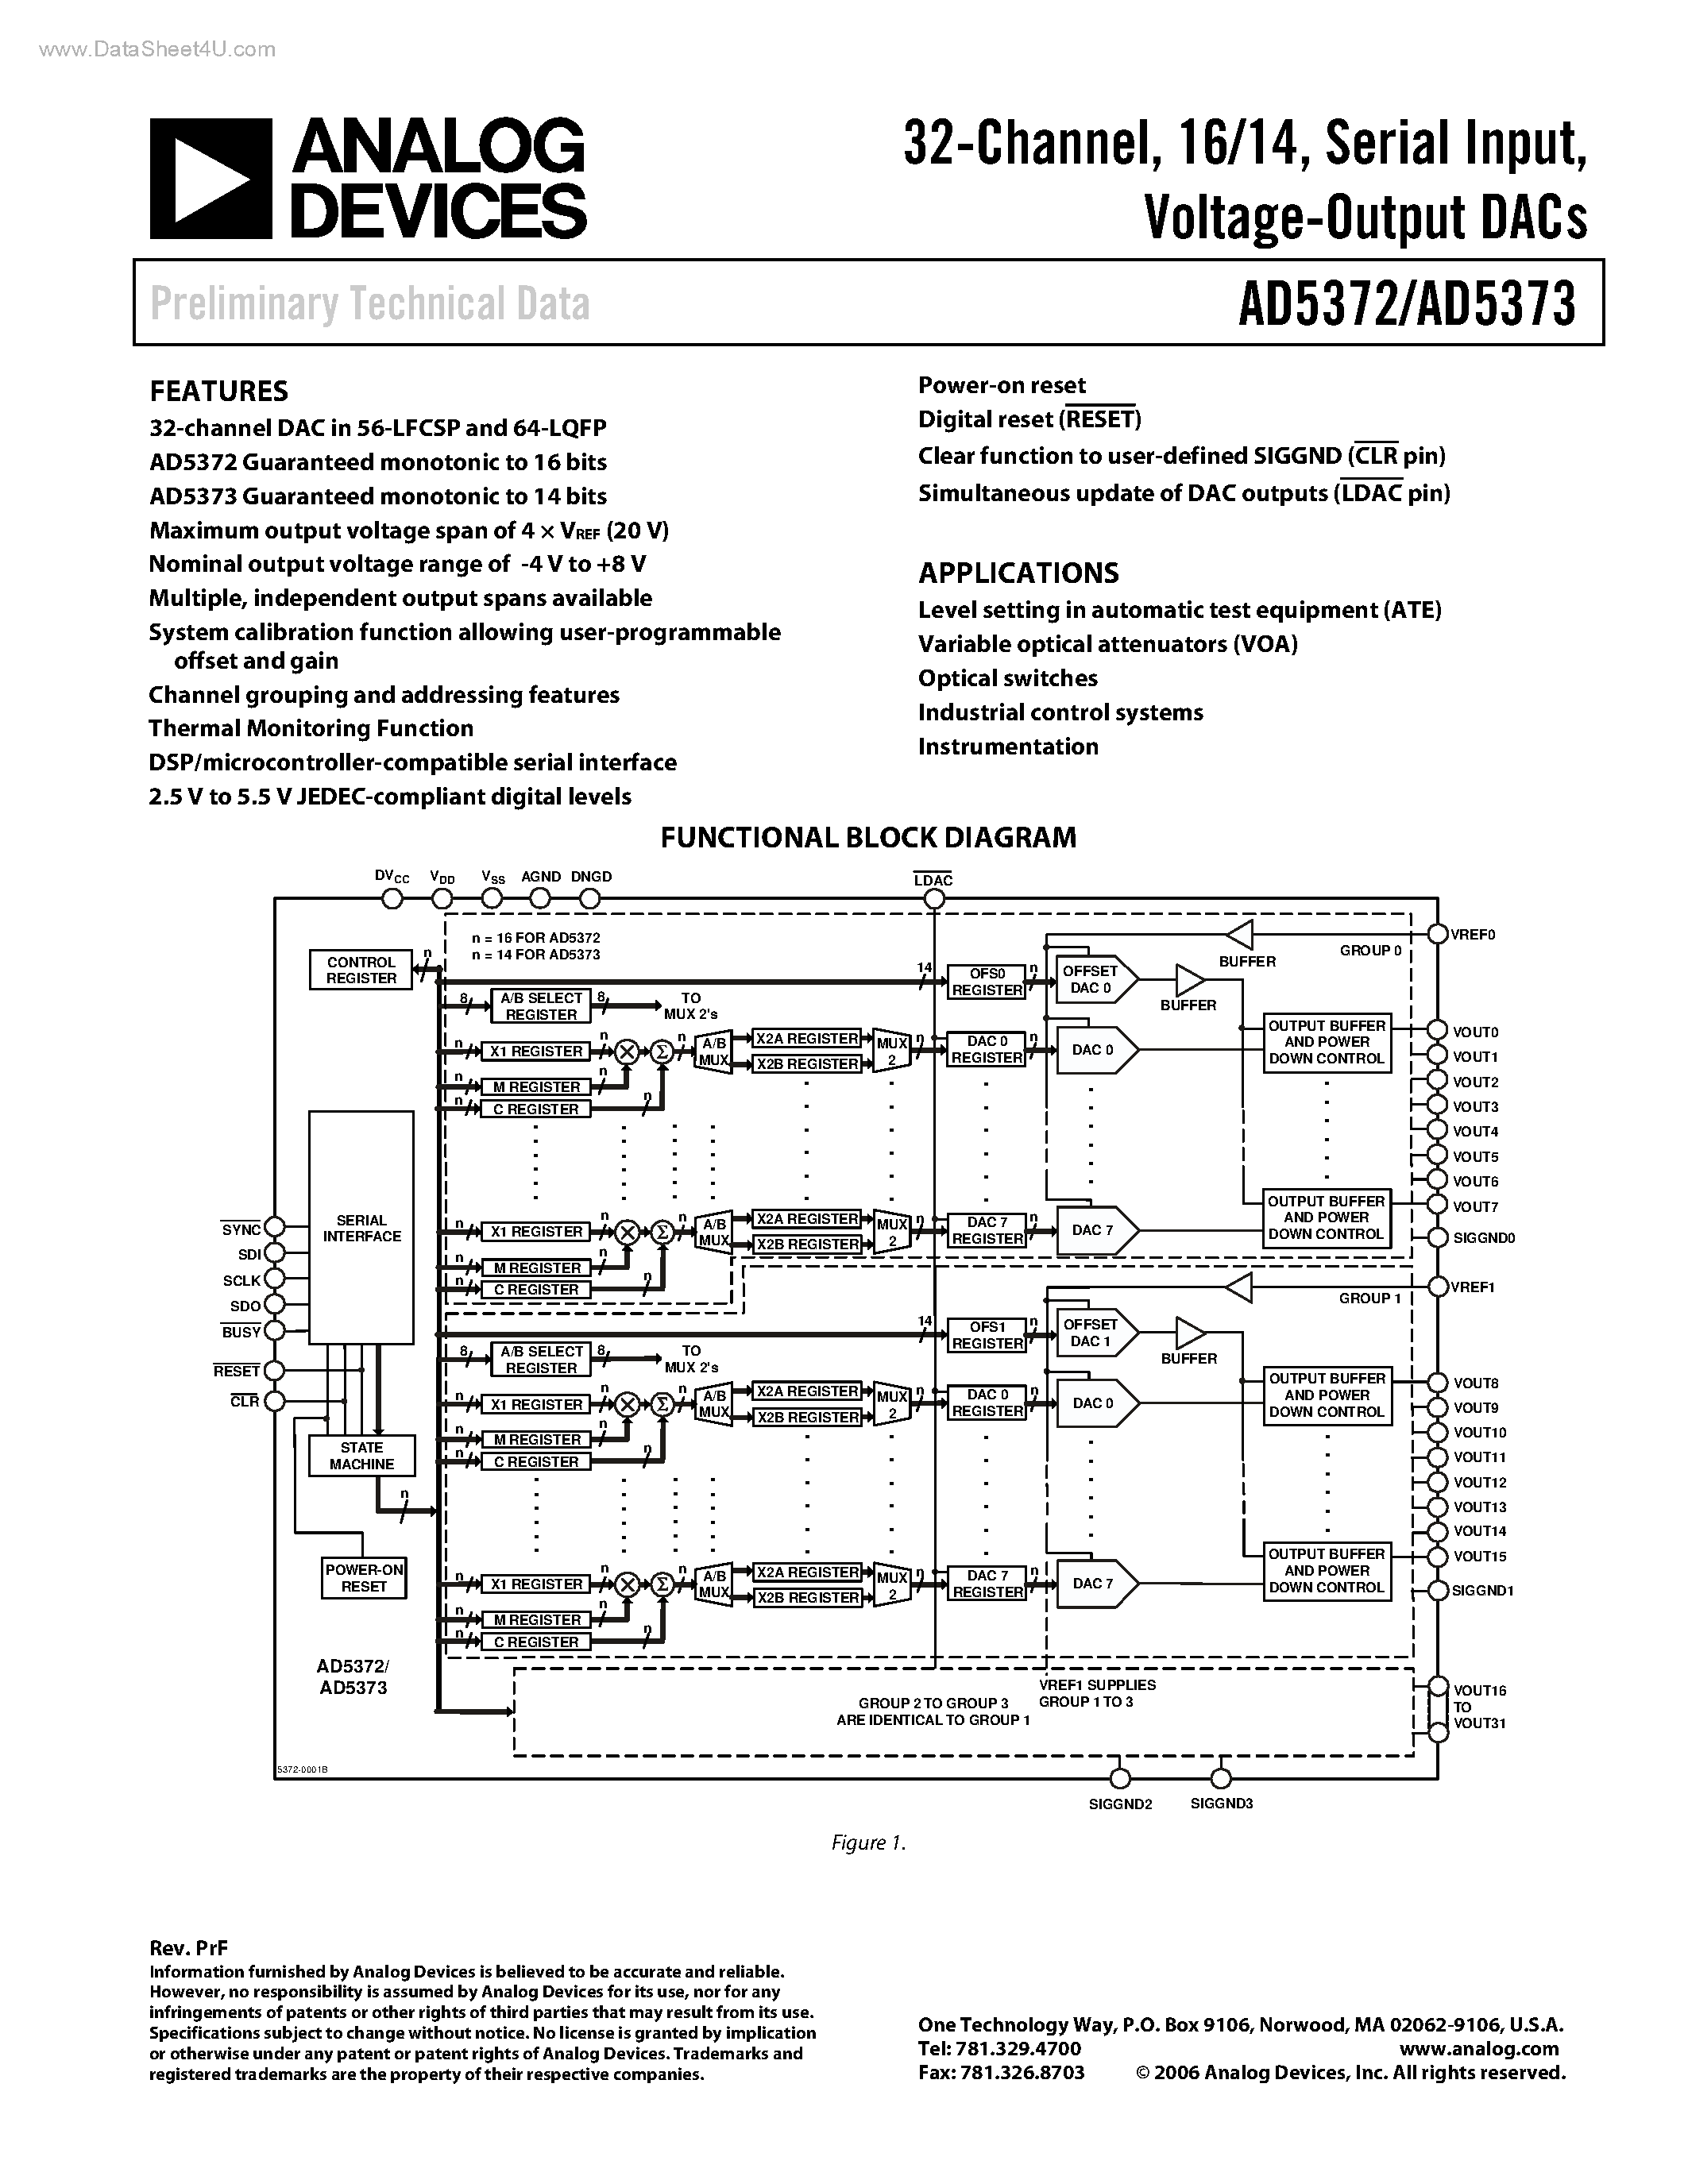 Даташит AD5372 - (AD5372 / AD5373) Voltage-Output DACs страница 1